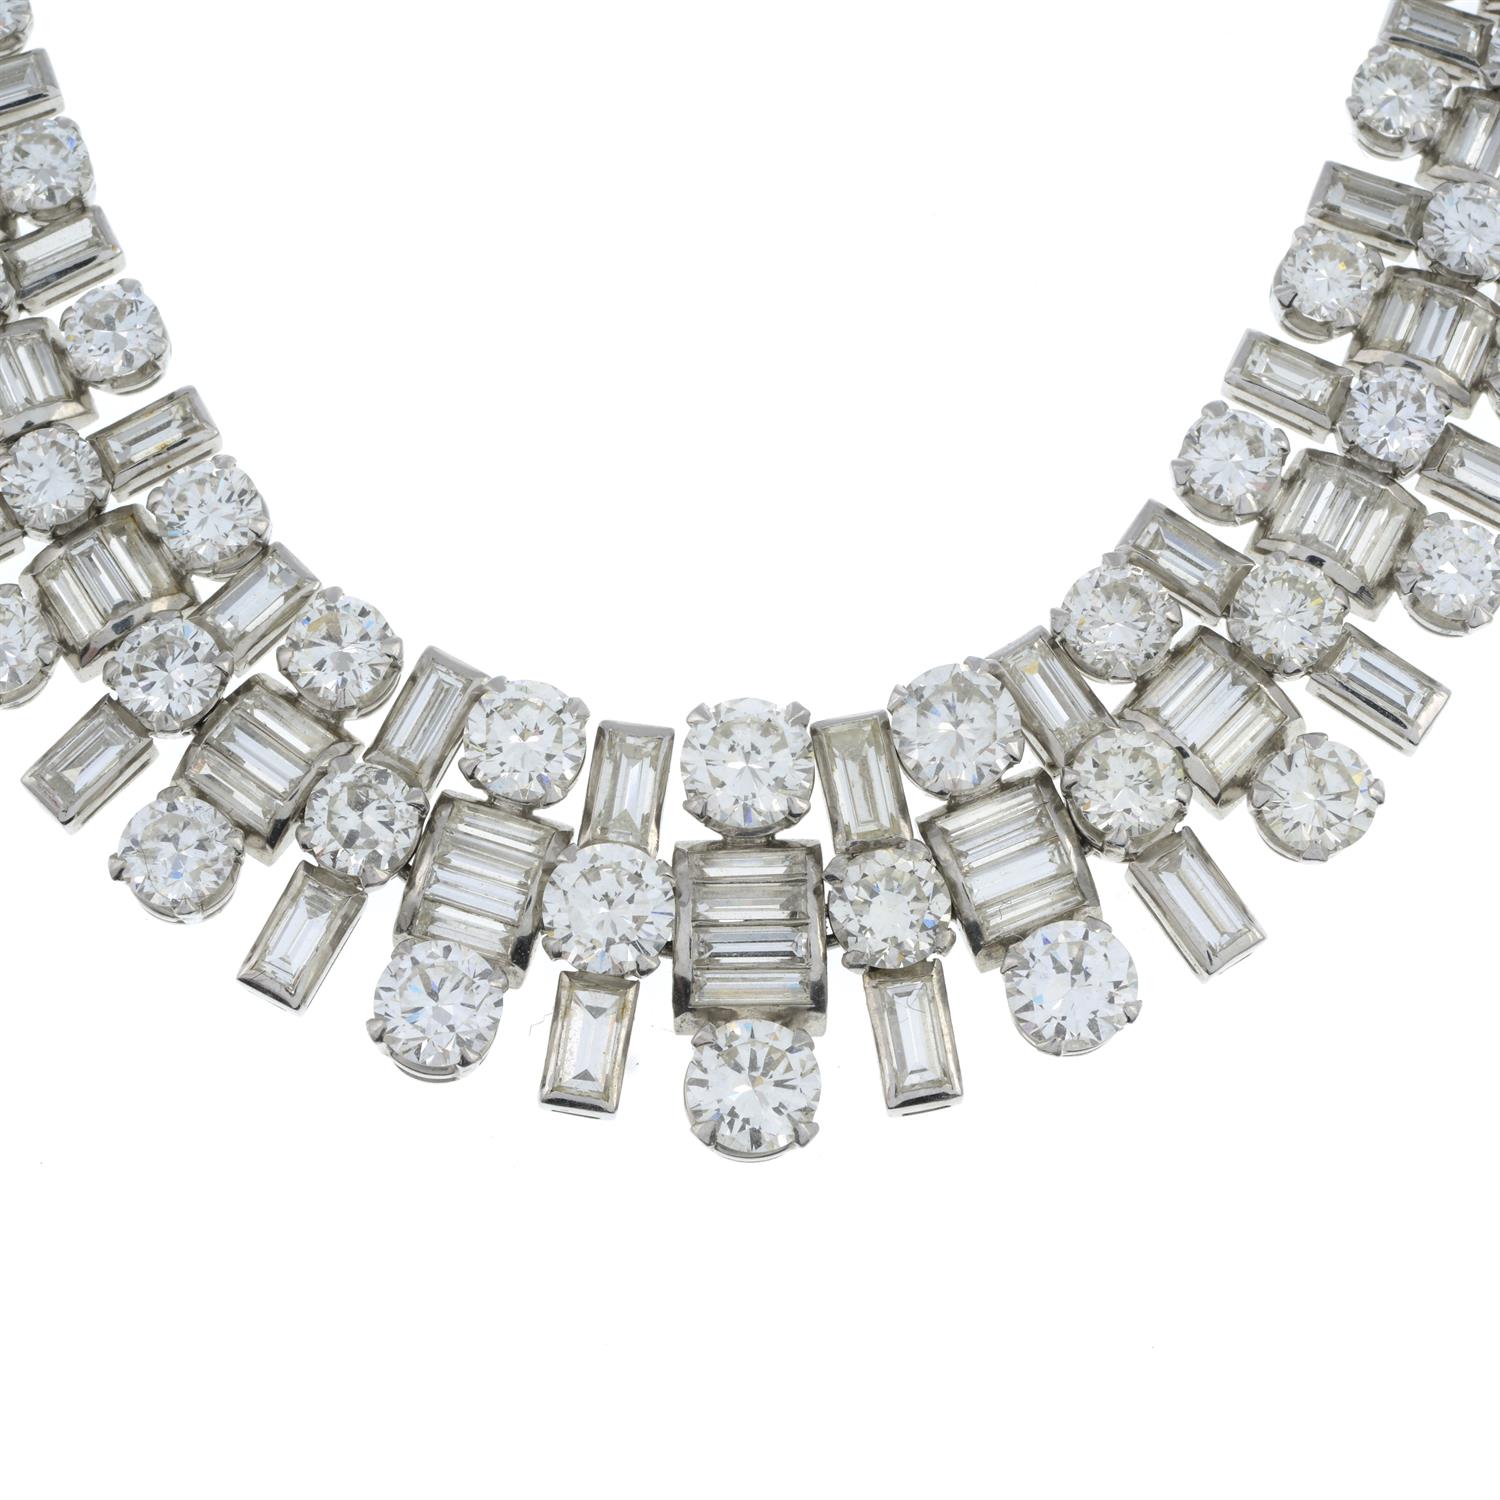 Mid 20th century platinum diamond necklace/bracelets - Image 5 of 6